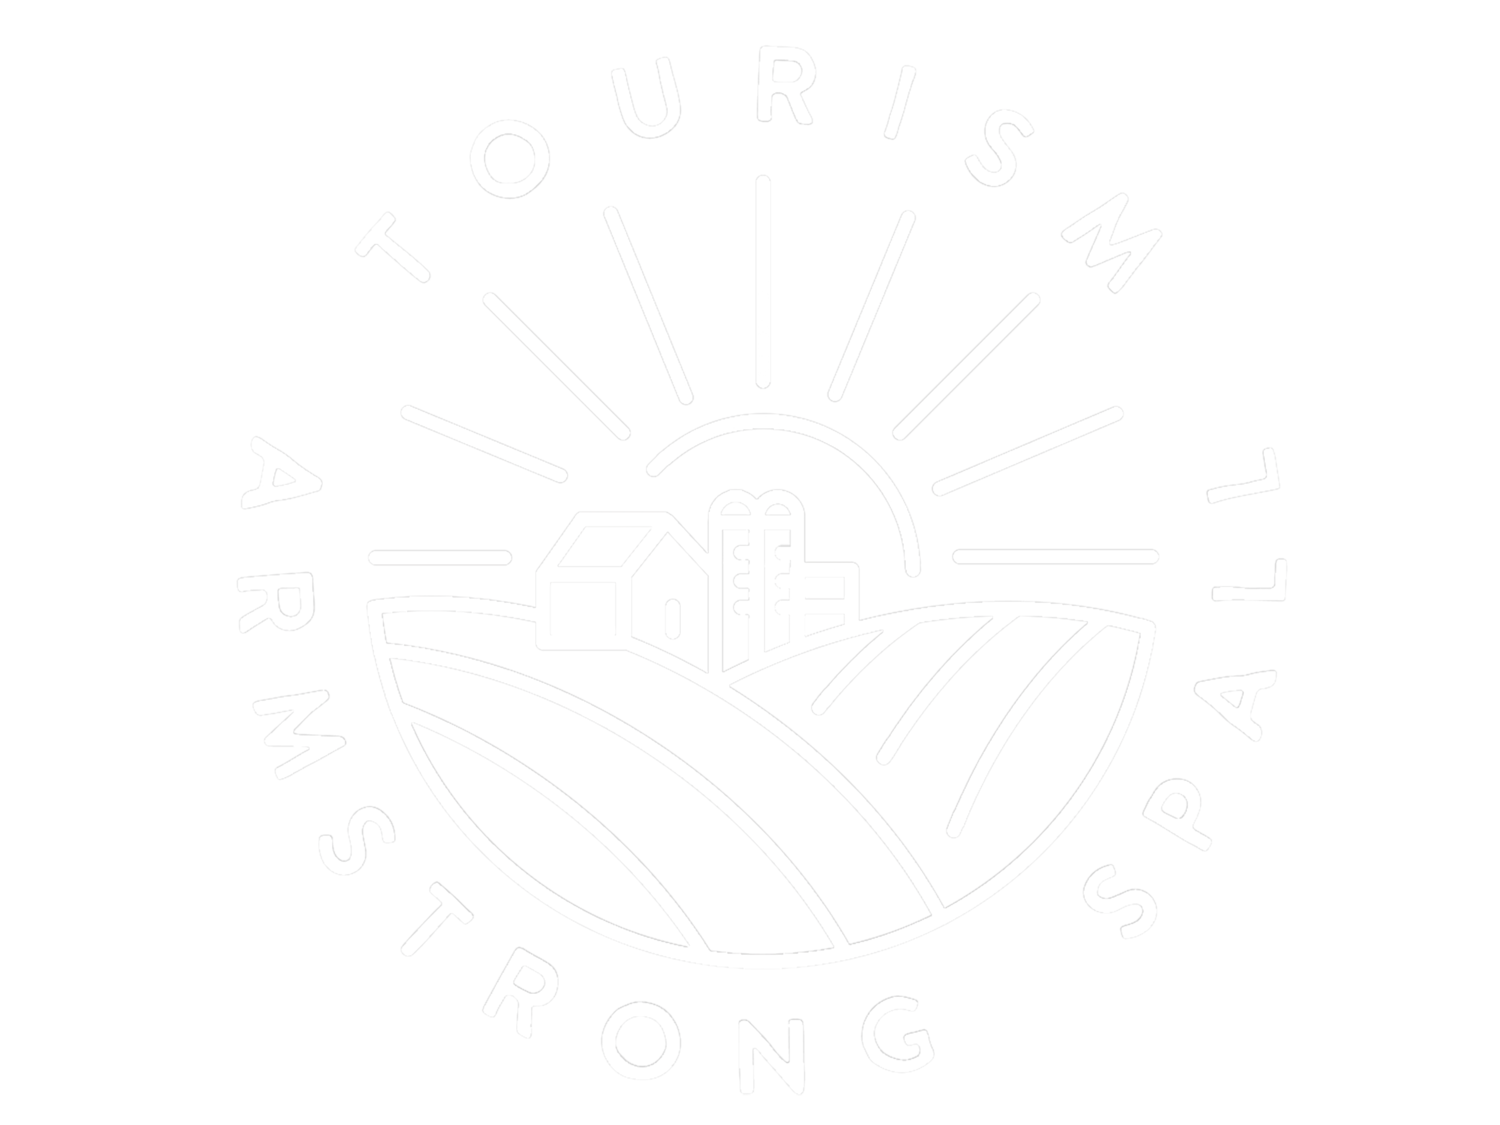 Tourism Armstrong Spallumcheen